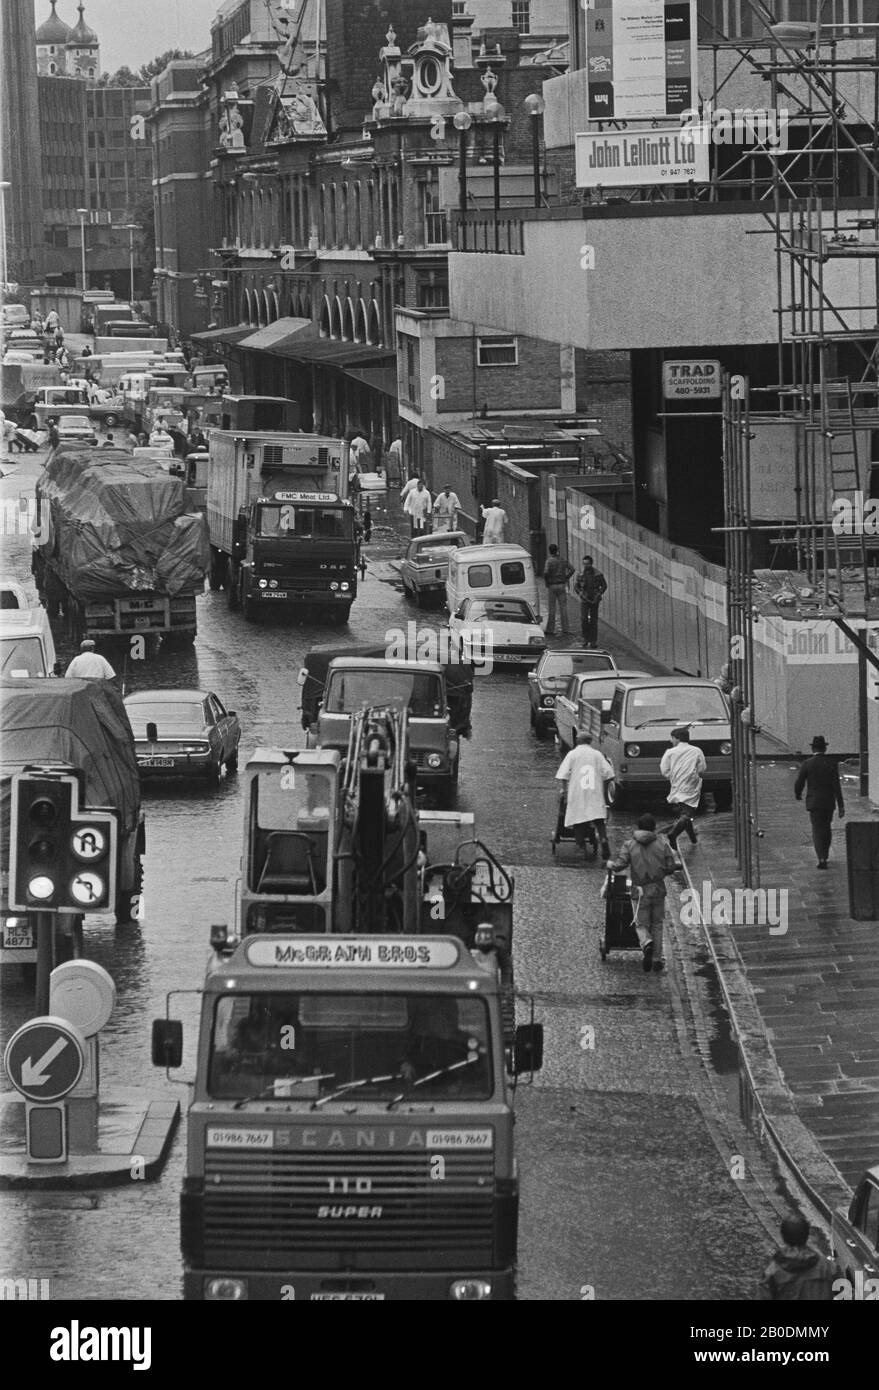 9/7/11 Billingsgate Fish Market 1981 Lower Thames St, market traffic plus morning rush hour Stock Photo